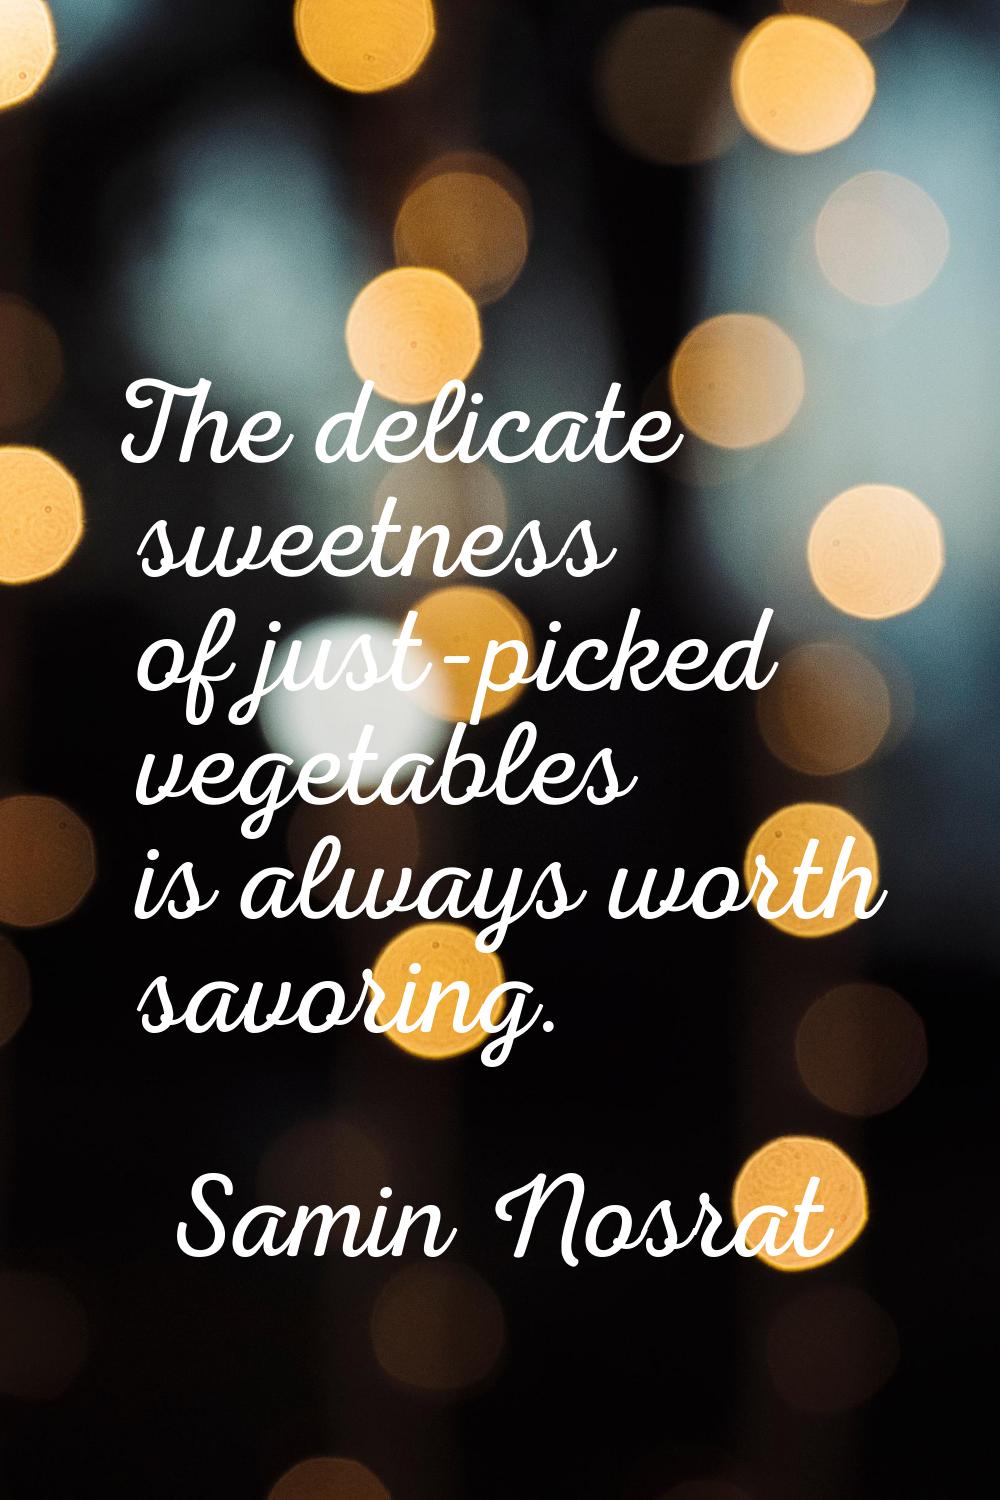 The delicate sweetness of just-picked vegetables is always worth savoring.